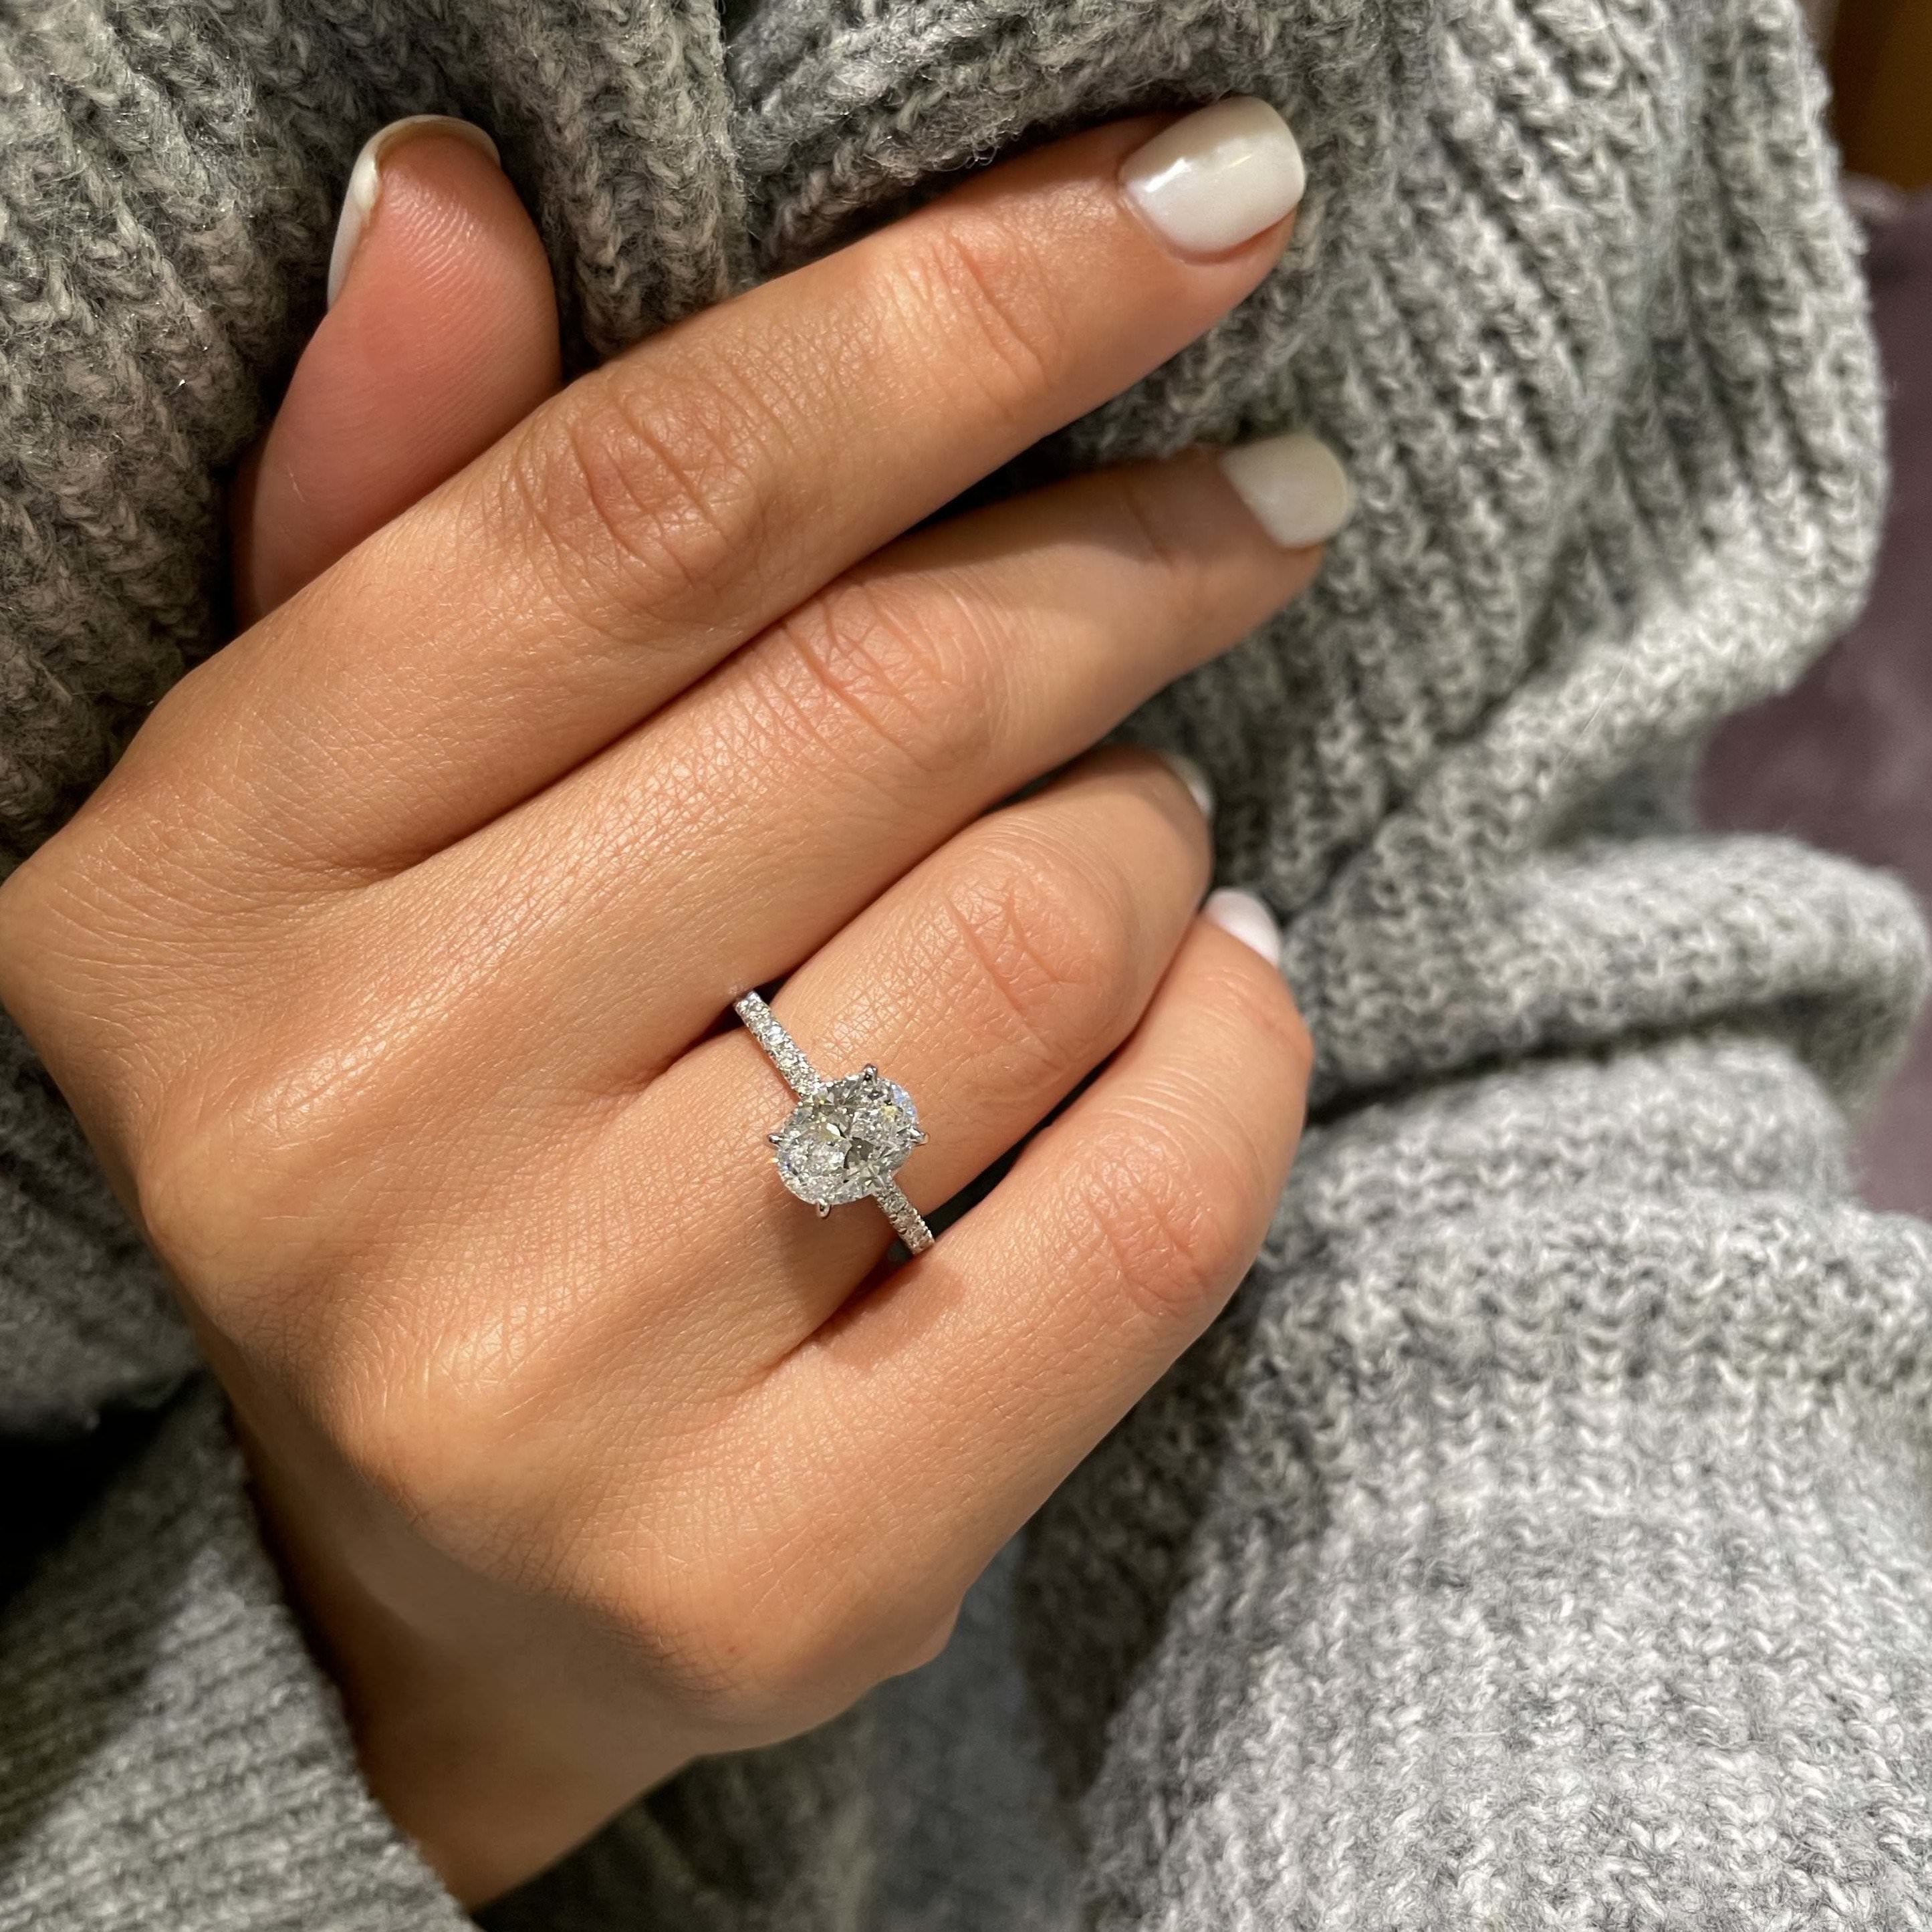 Lucy Diamond Engagement Ring   (2 Carat) -18K White Gold